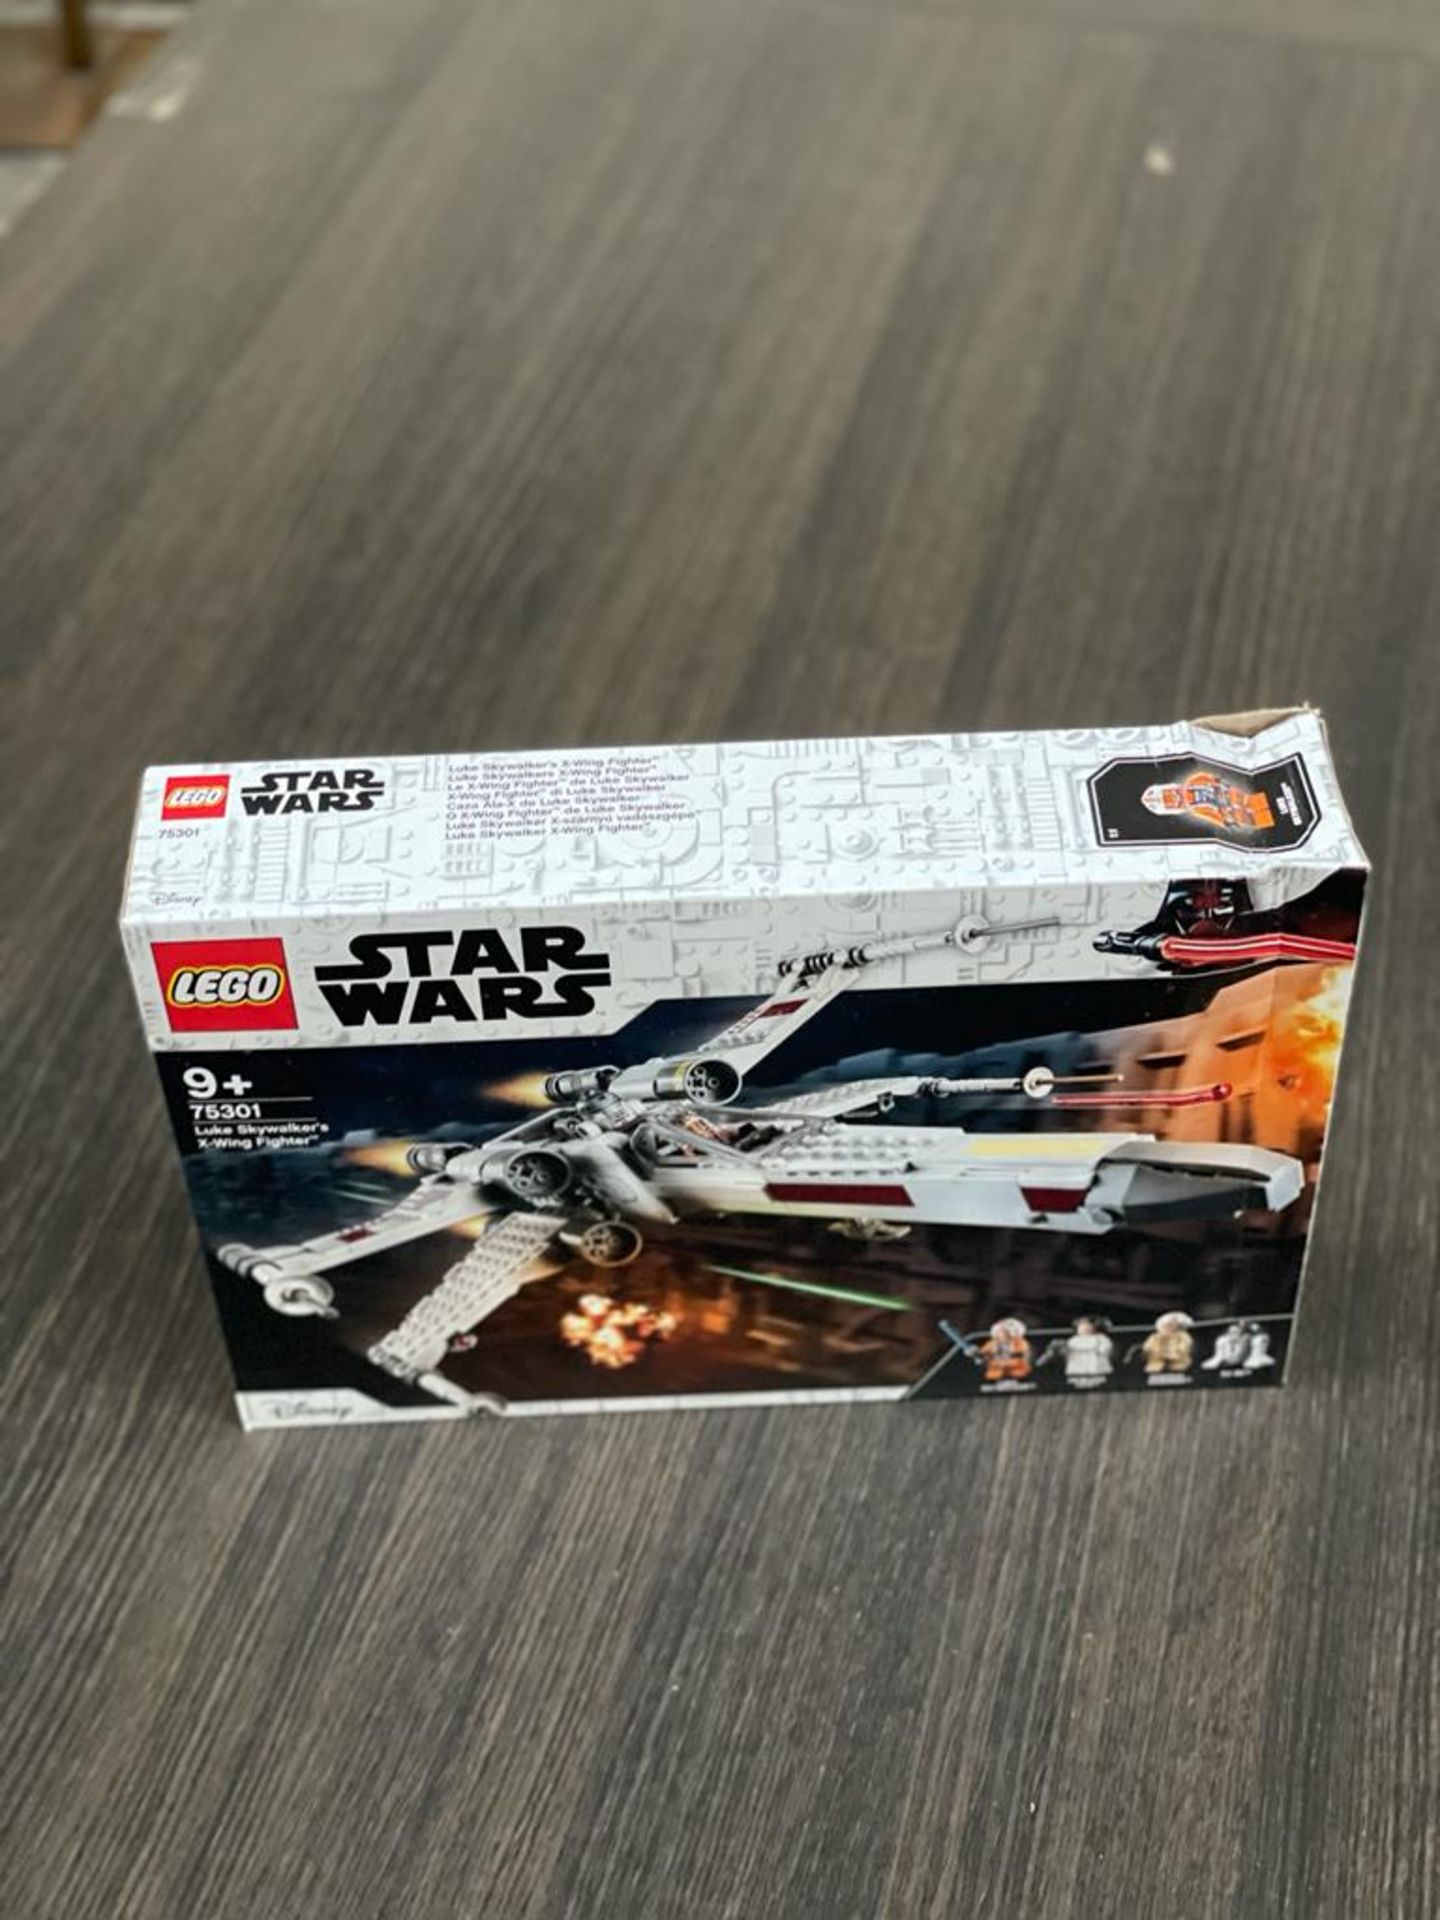 1 x Lego Star Wars Luke SkyWalker X  Wing Fighter 75301 - Brand New - RRP £70.00 - CL987 - Ref: - Image 4 of 4